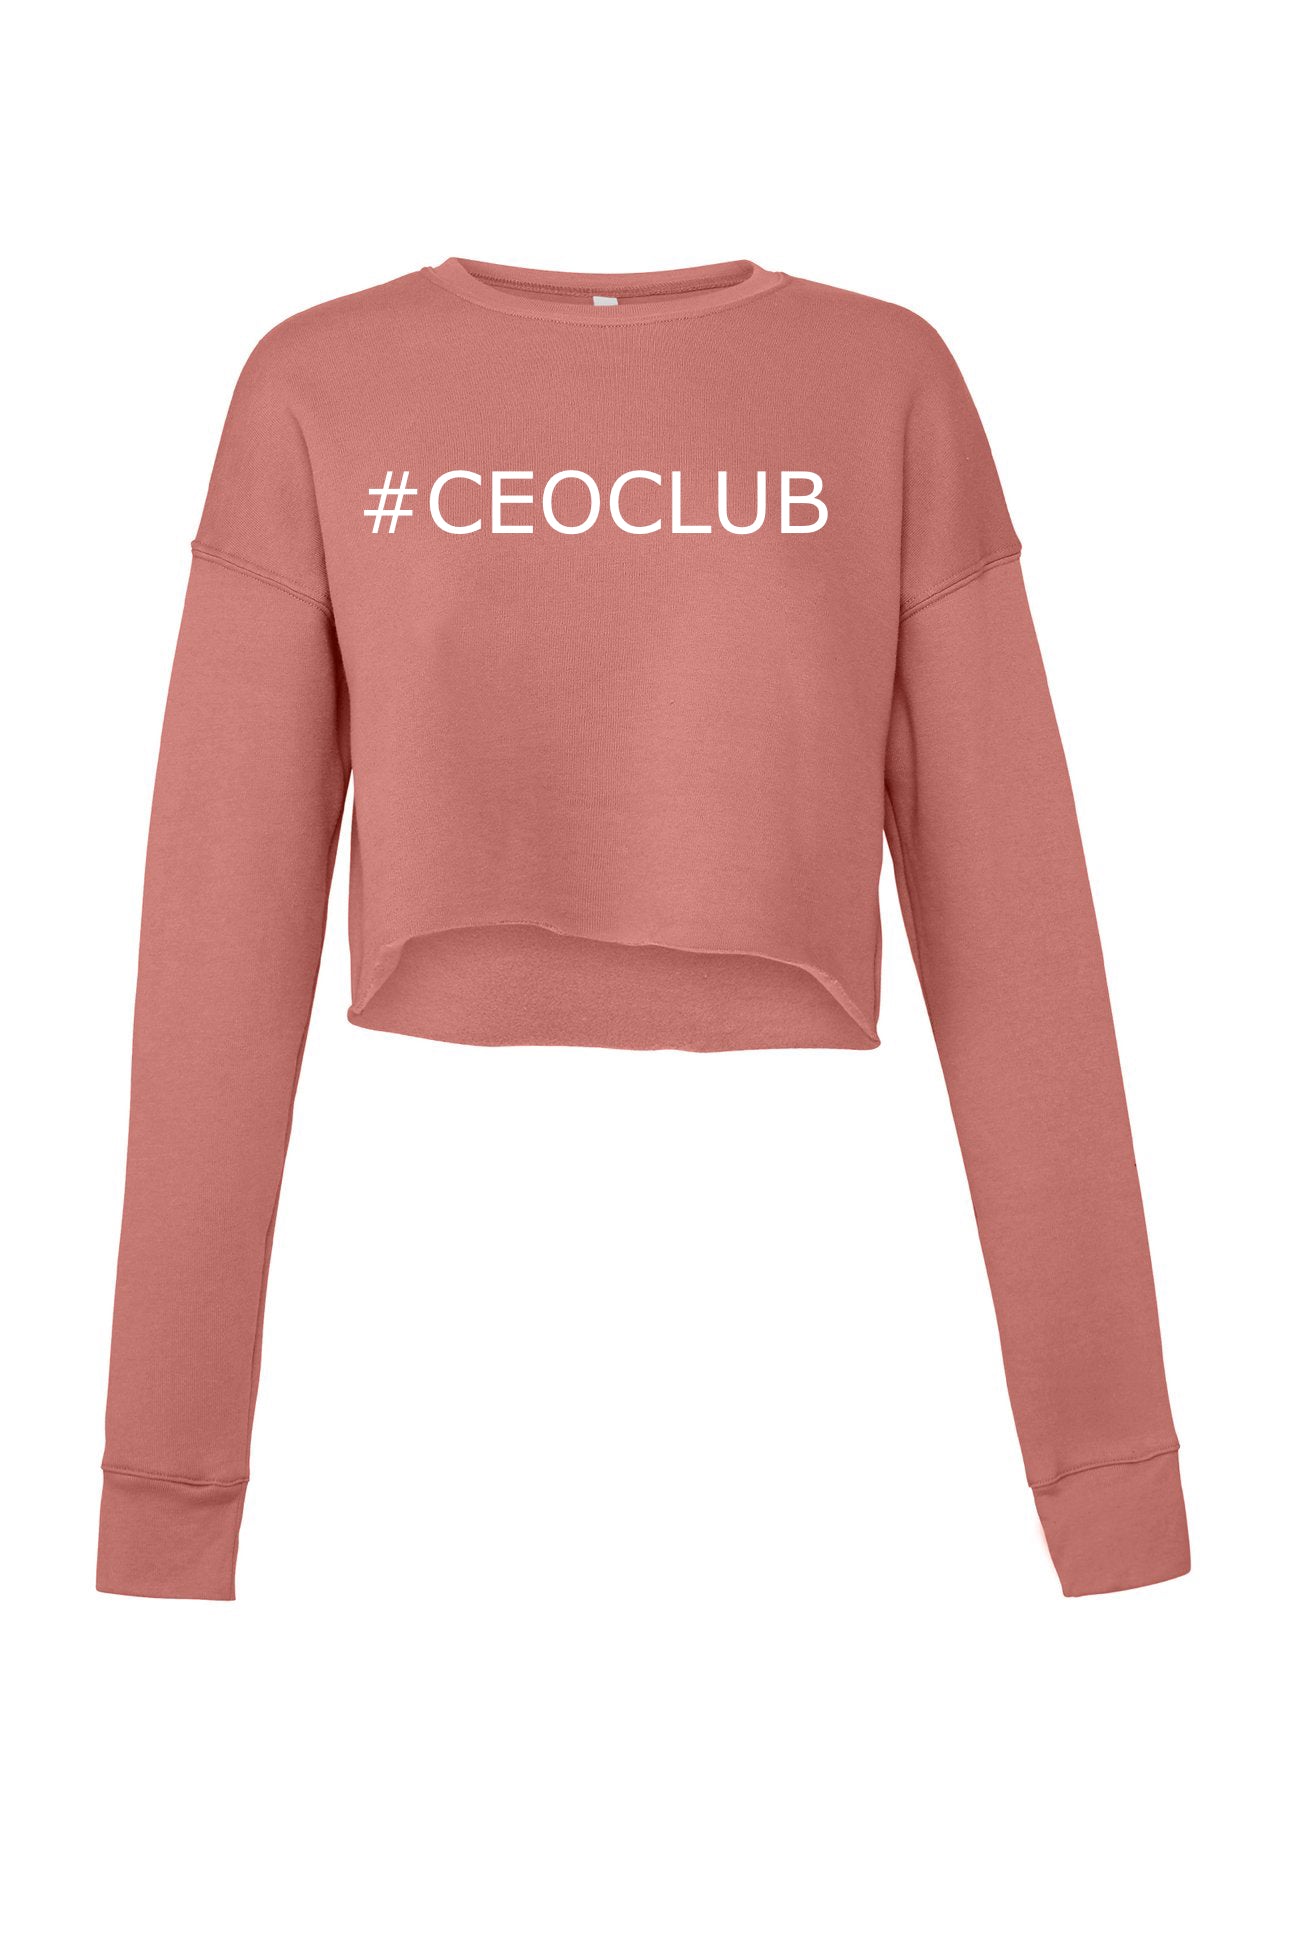 CEOCLUB Crop Crew Fleece